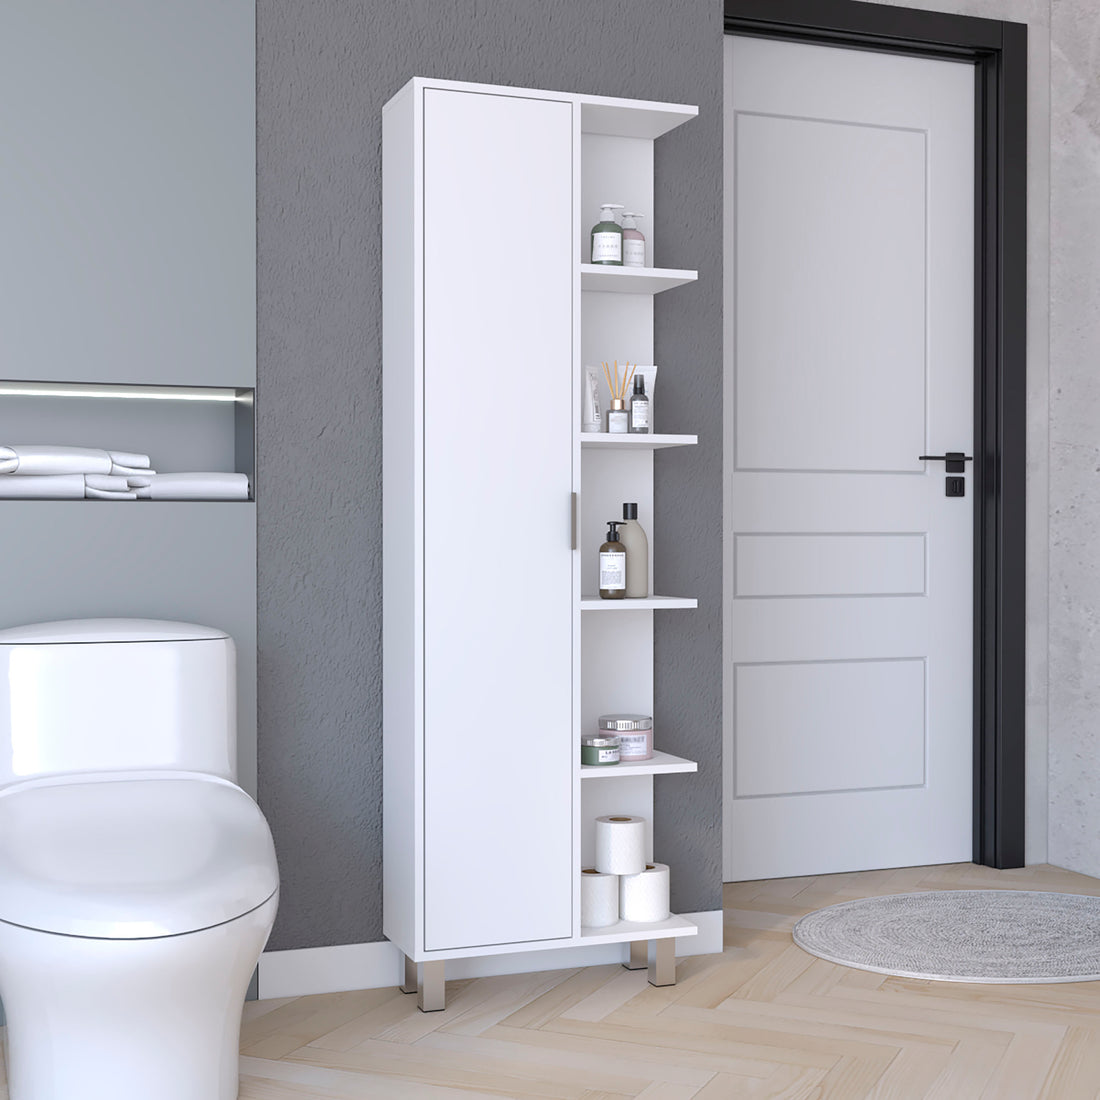 Crovie Linen 63 Inch High Bathroom Cabinet